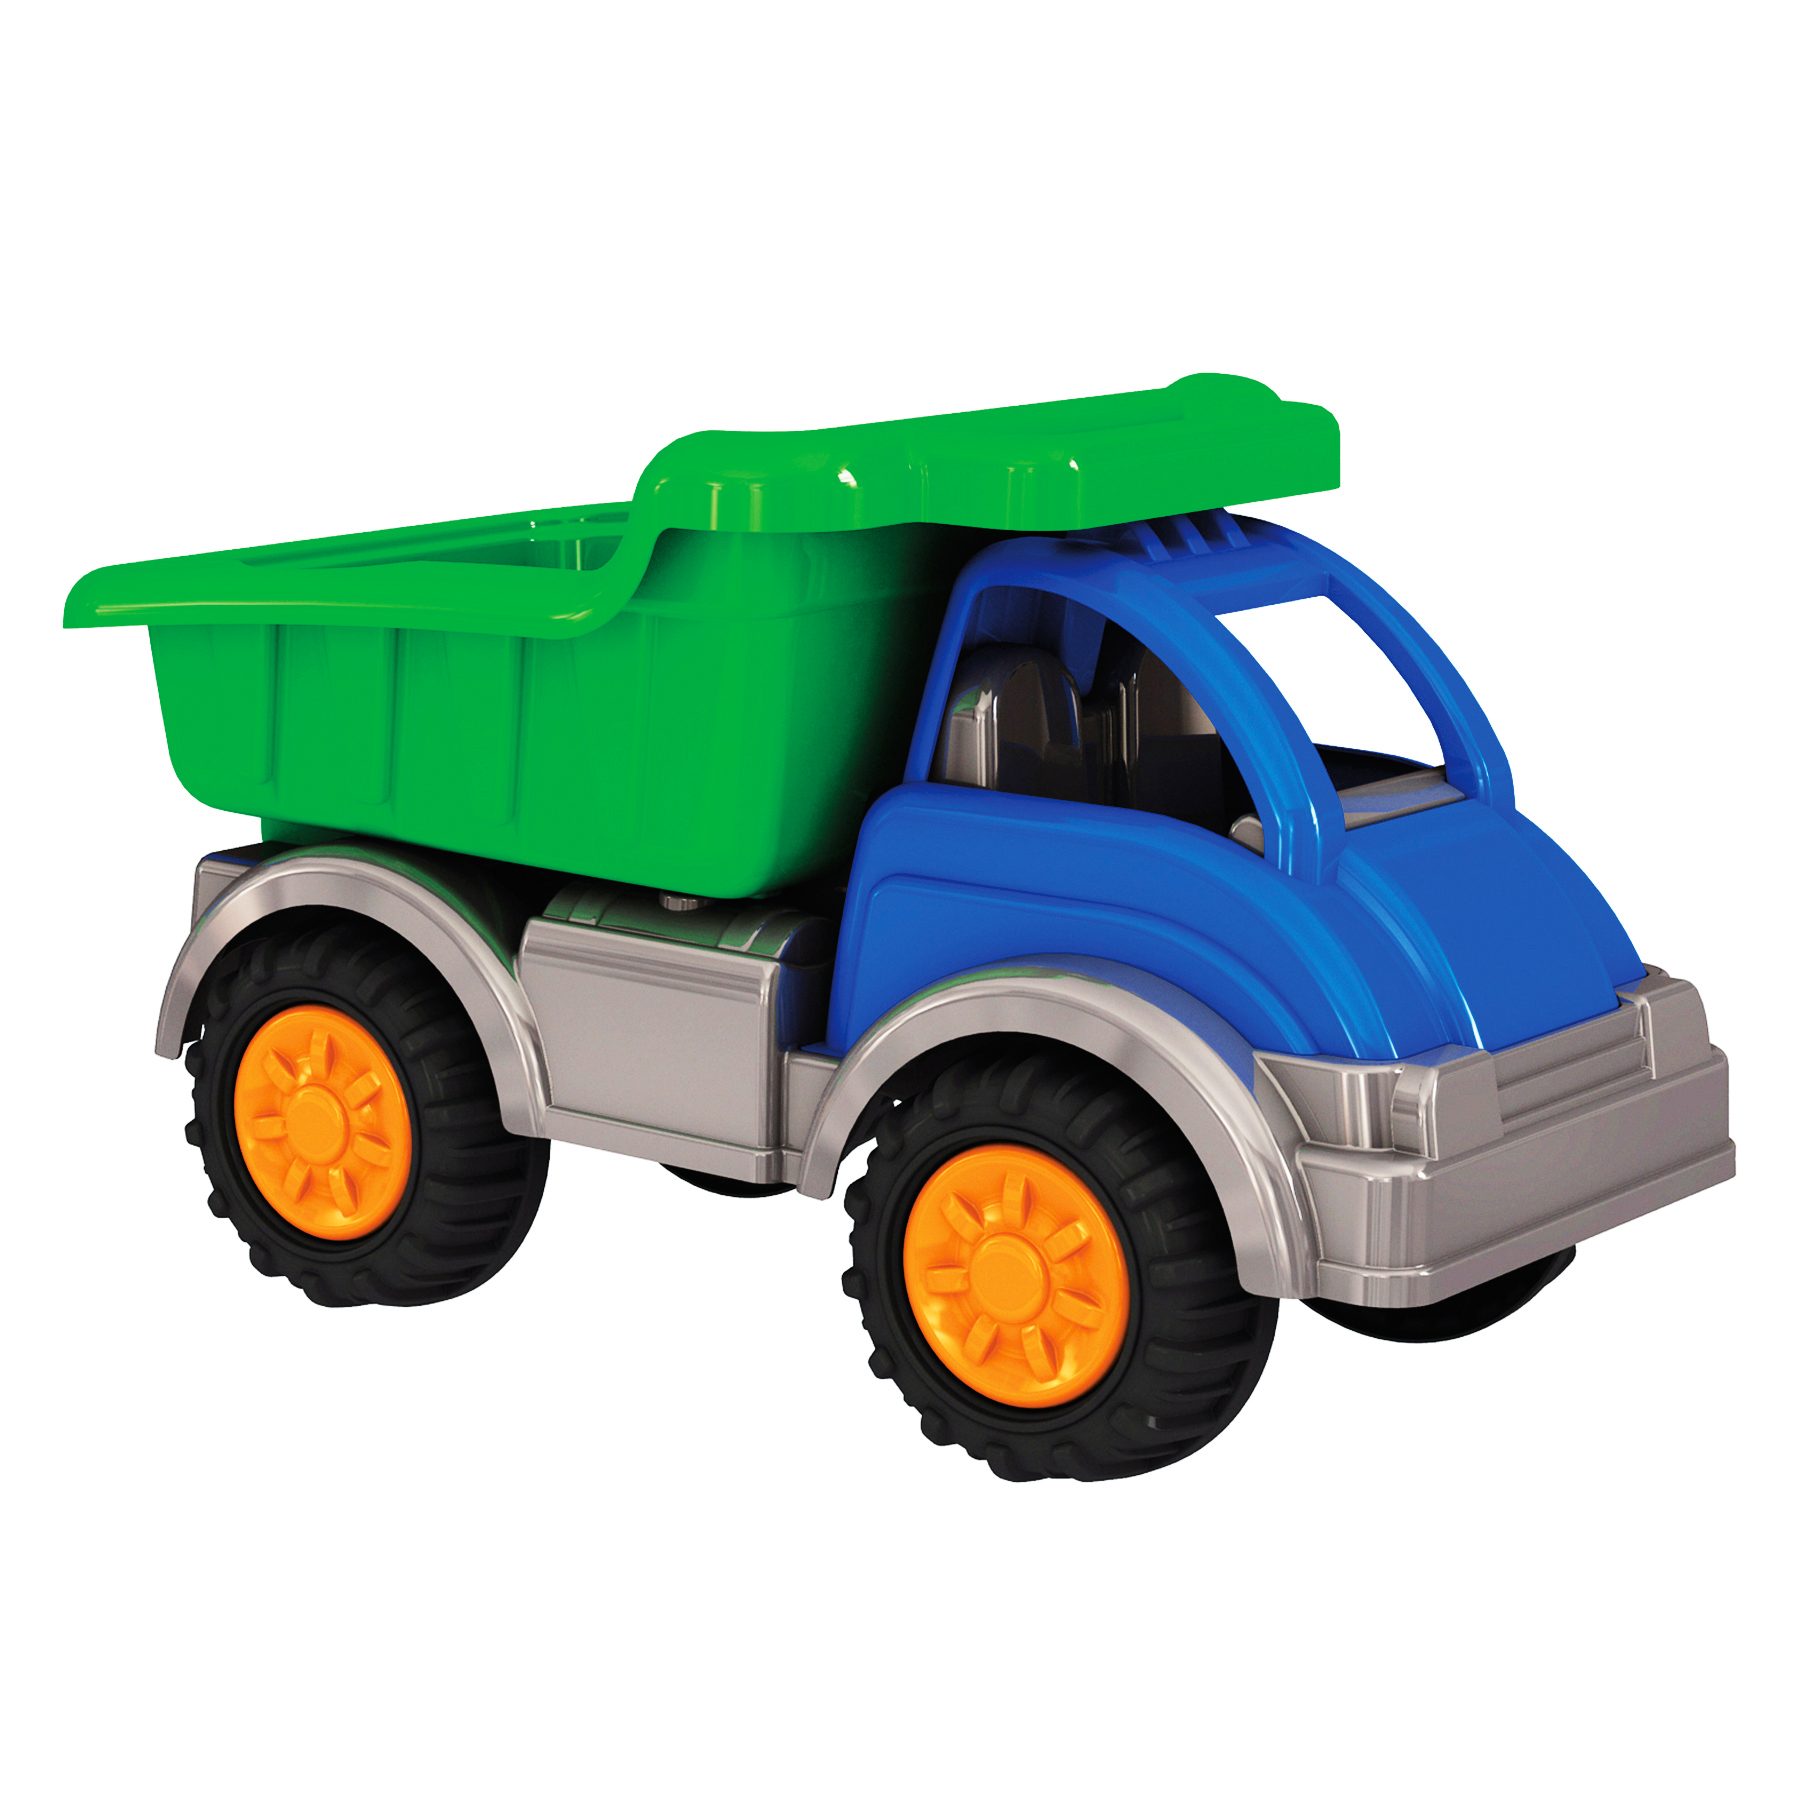 Large Kids Truck 24\u002639;\u002639; Dump Truck Kids Playing Sand Loader Children Vehicle Toy  eBay